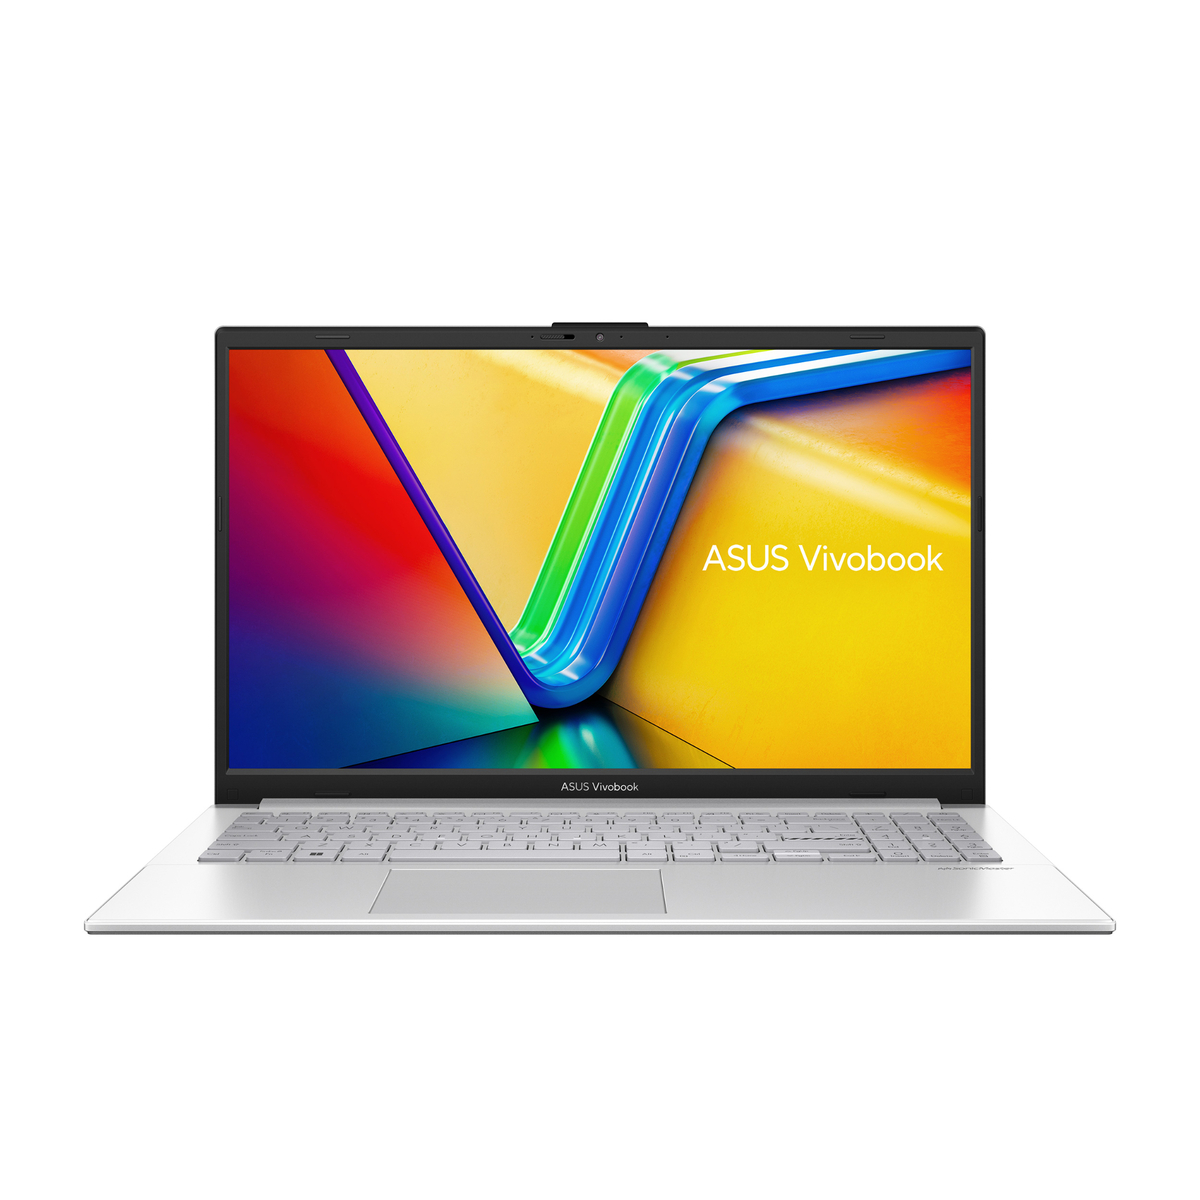 ASUS VivoBook 15 Thin and Light Laptop, 15.6” FHD Display, Intel i3-1005G1  CPU, 8GB RAM, 128GB SSD, Backlit Keyboard, Fingerprint, Windows 10 Home in